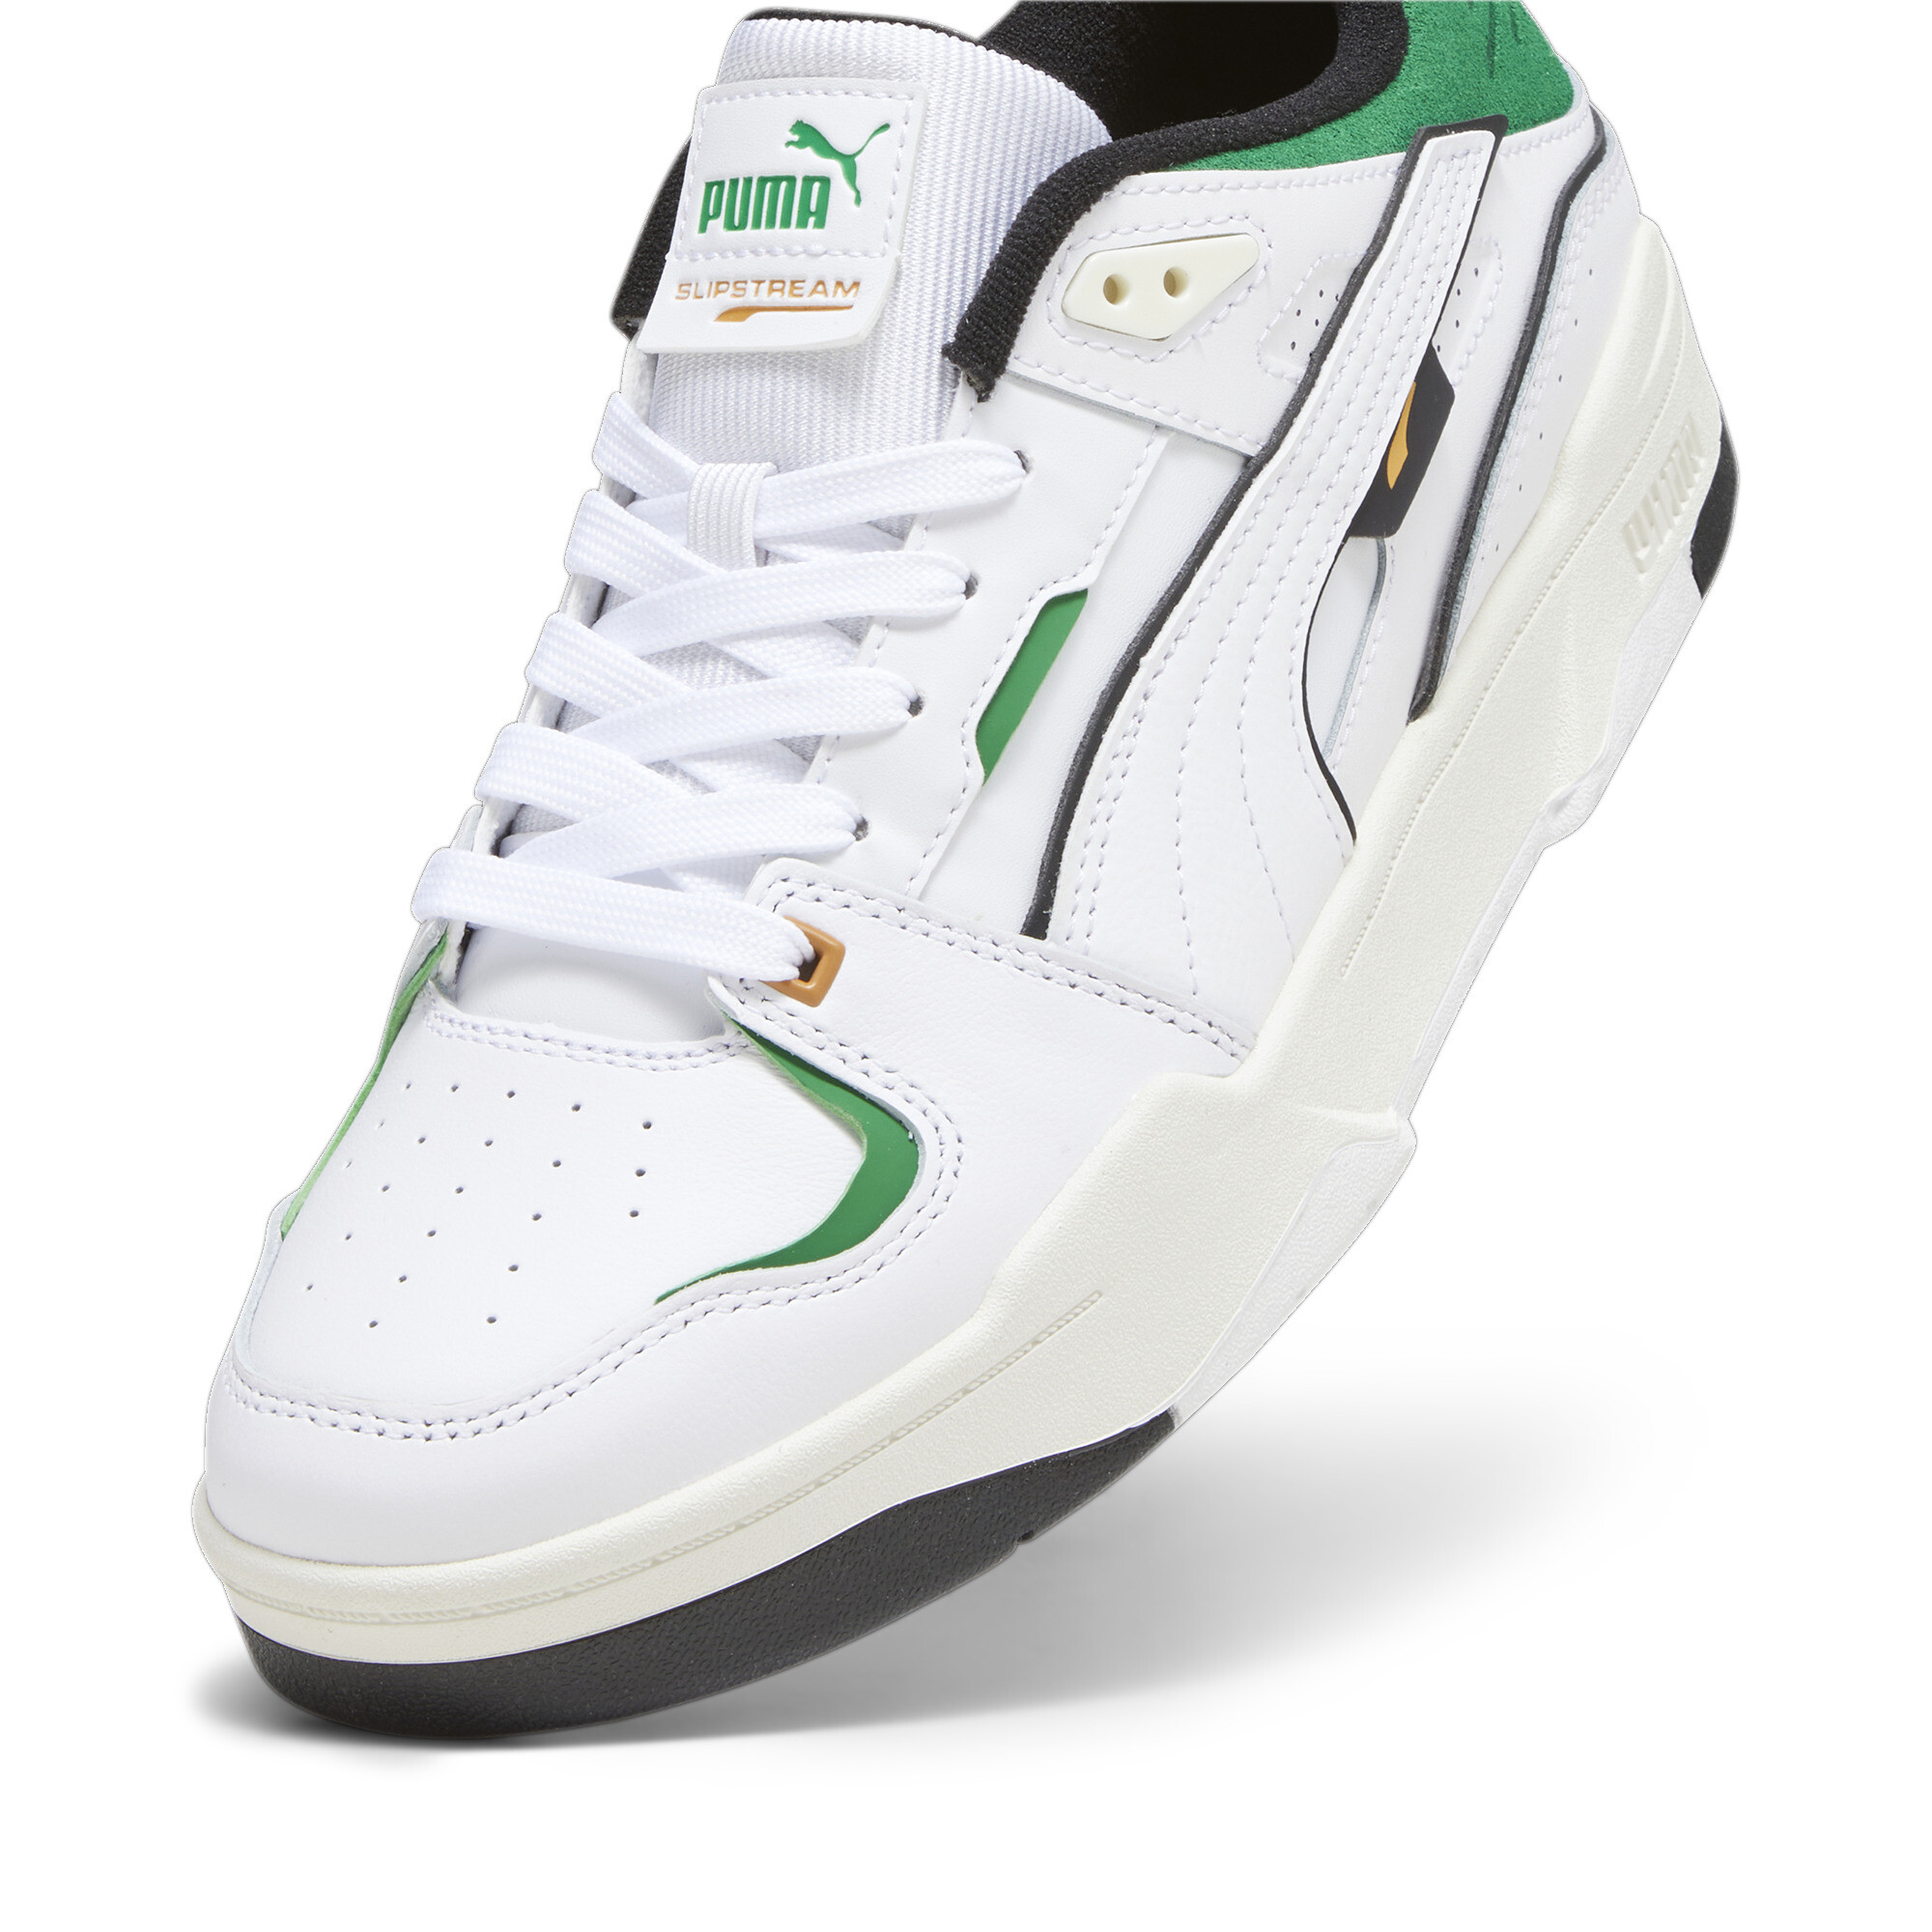 Men's PUMA Slipstream Bball Sneakers In 20 - White, Size EU 42